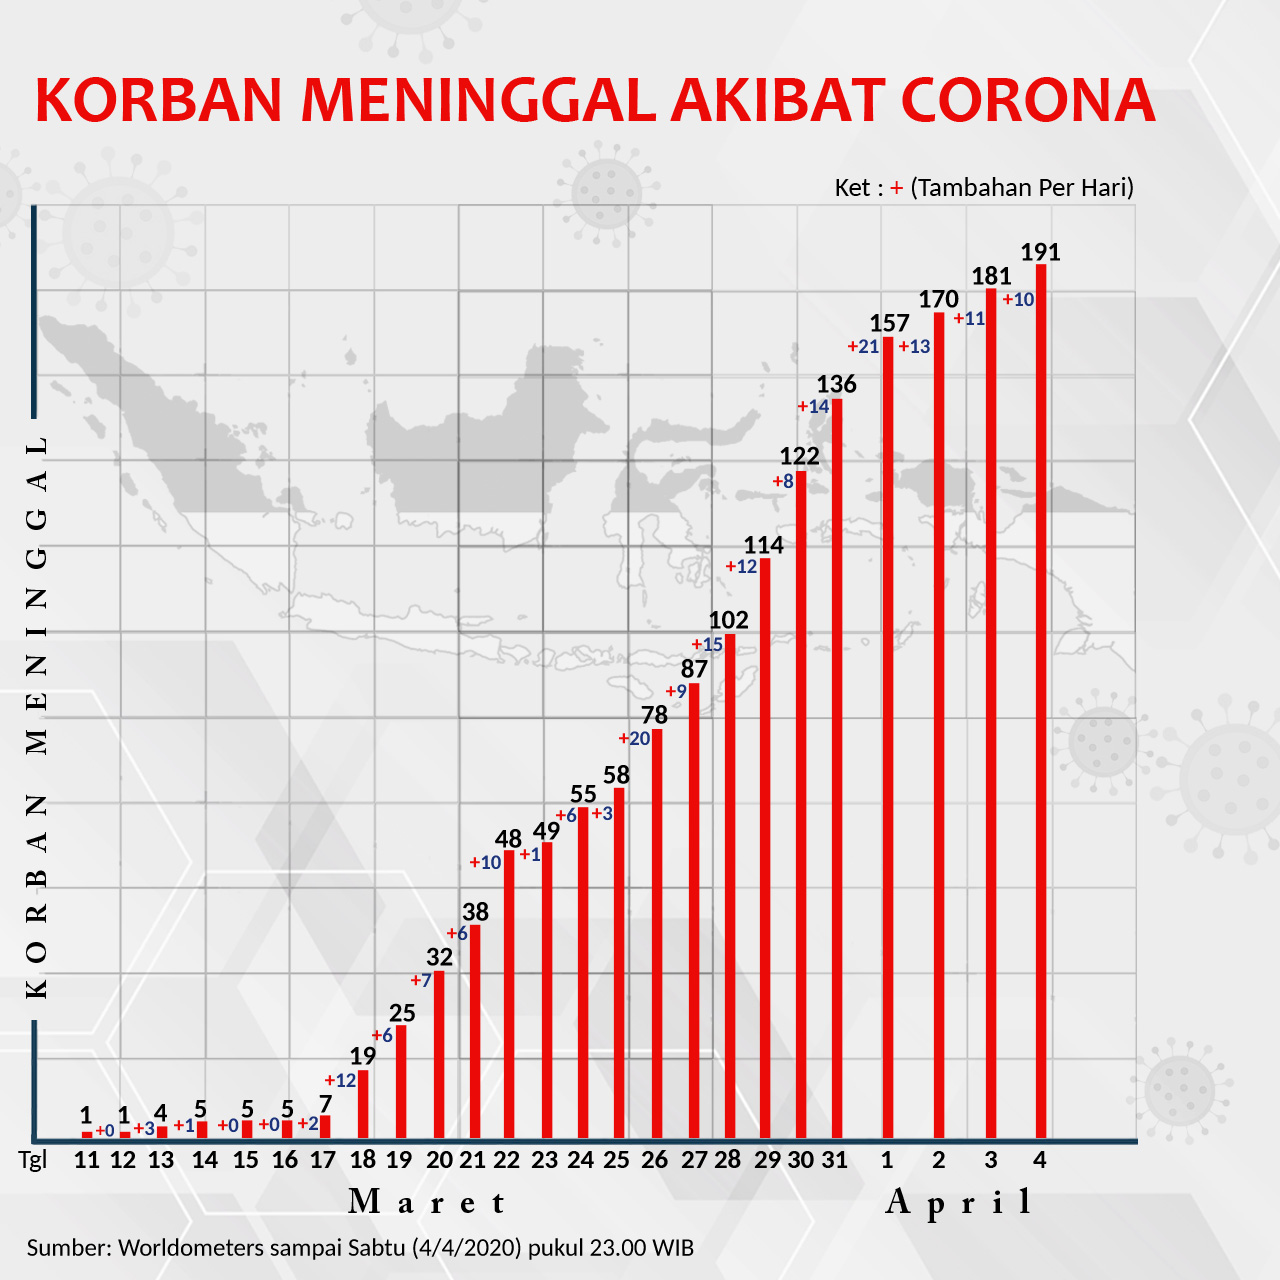 Korban Meninggal Akibat Corona Di Indonesia Terus Meningkat